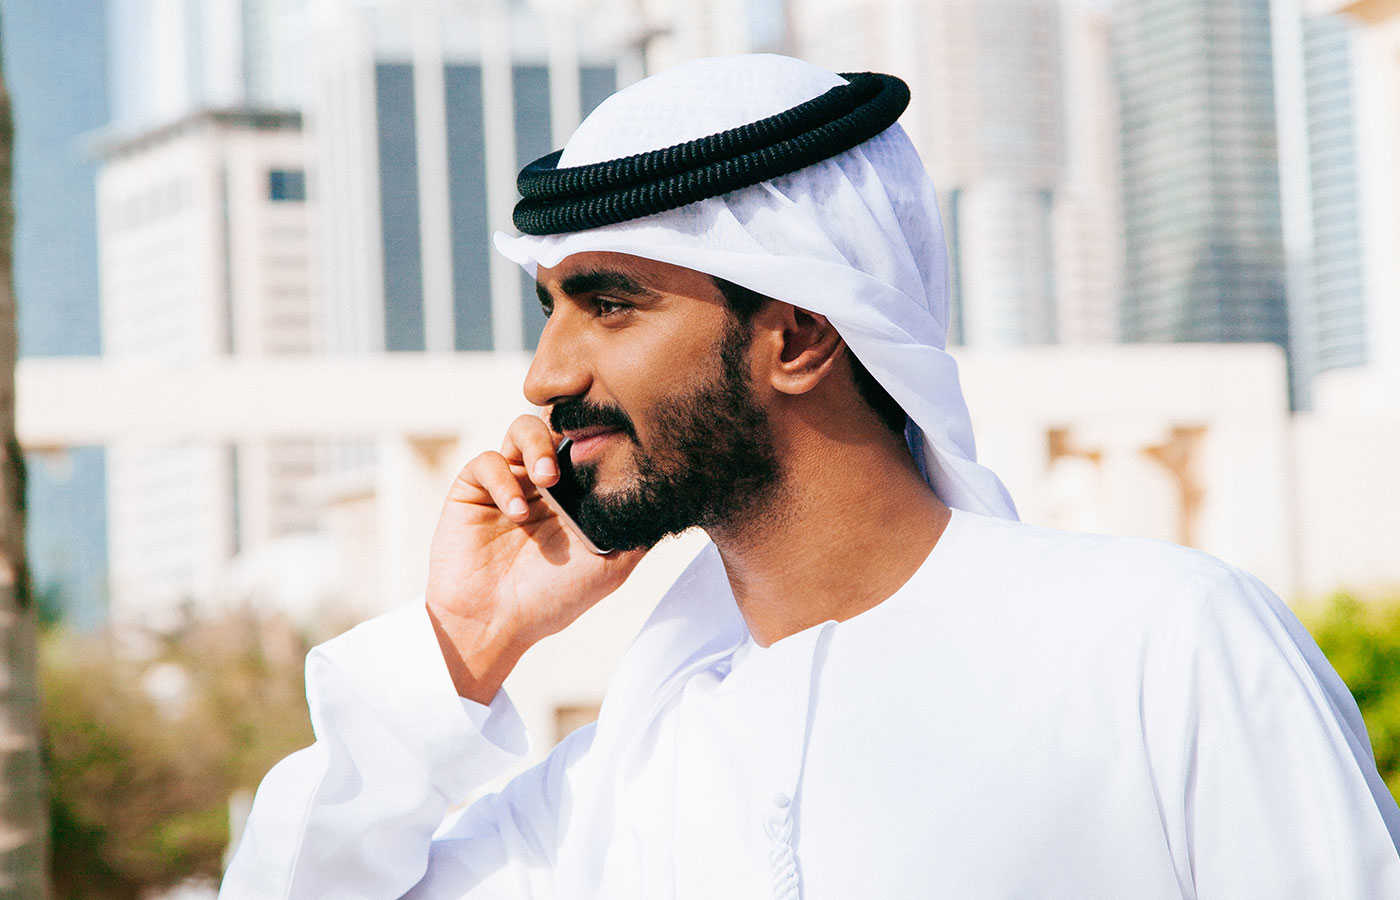 Emirati gentleman on the mobile phone